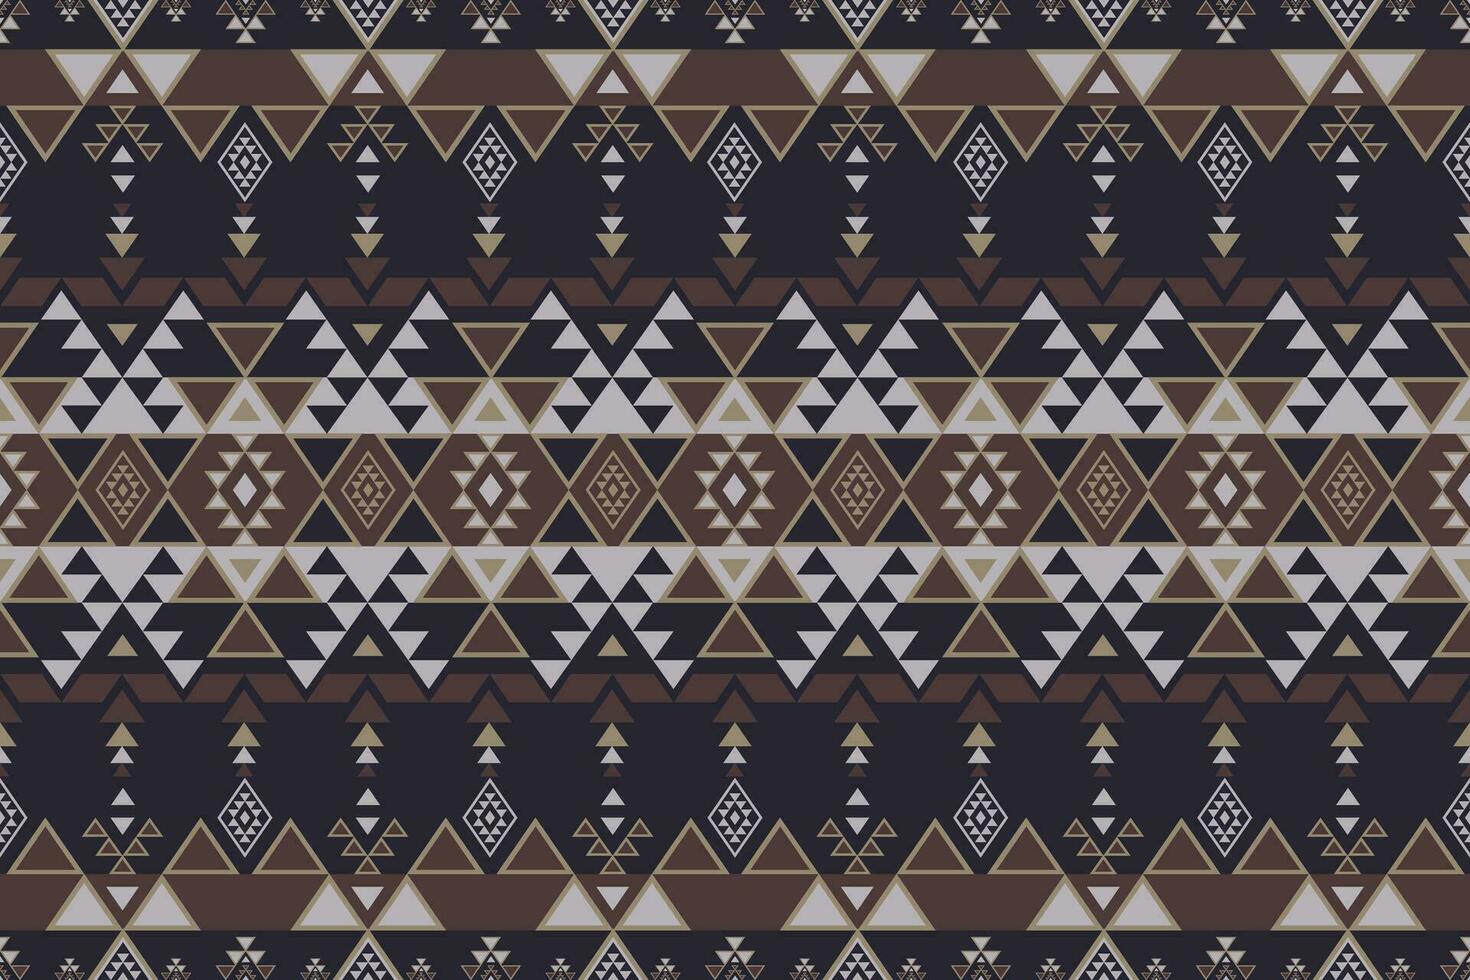 Ethnic southwest vintage pattern. Ethnic southwest geometric shape seamless pattern vintage style. Southwest geometric pattern use for fabric, textile, home decoration elements, upholstery, etc vector